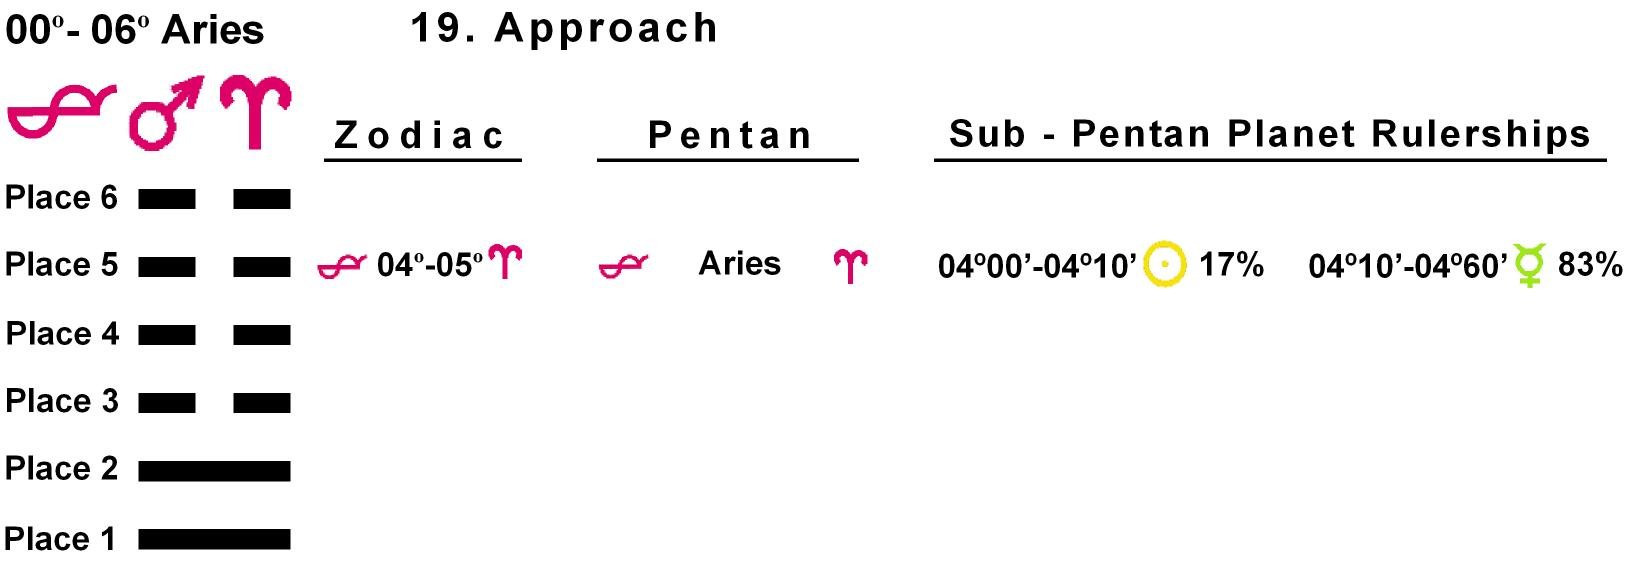 Pent-lines-01AR 04-05 Hx-19 Approach